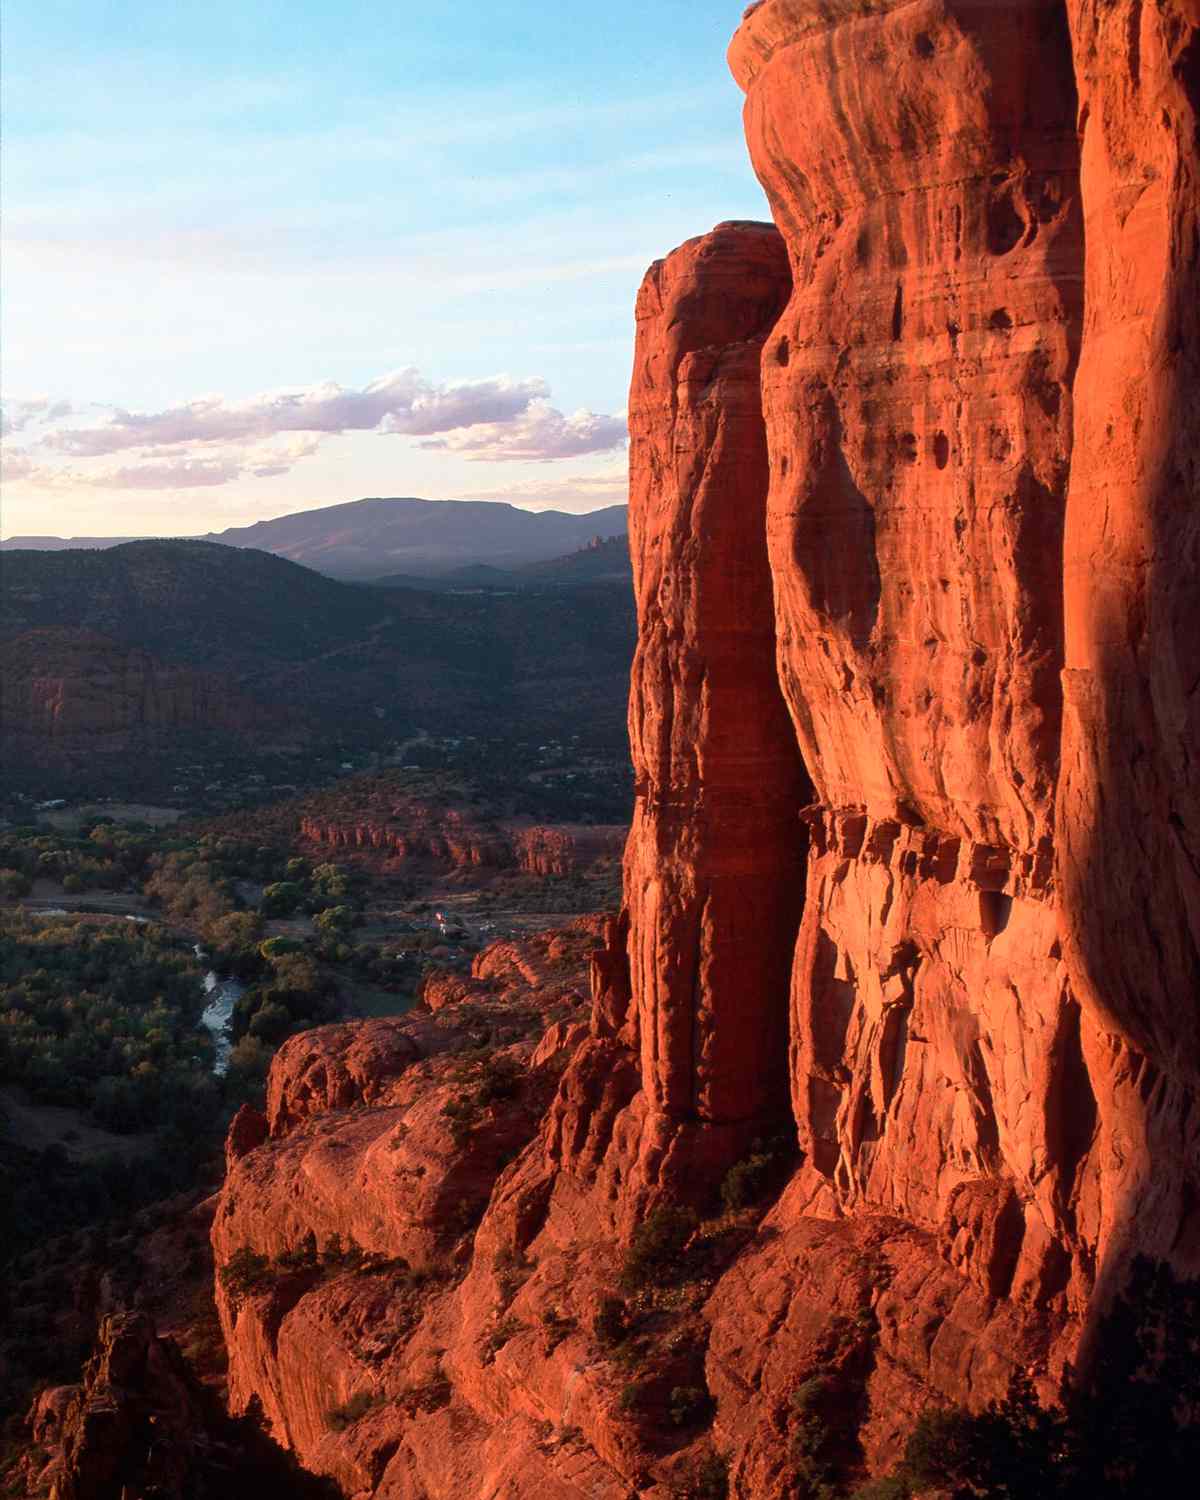 Arizona’s red rock landscape